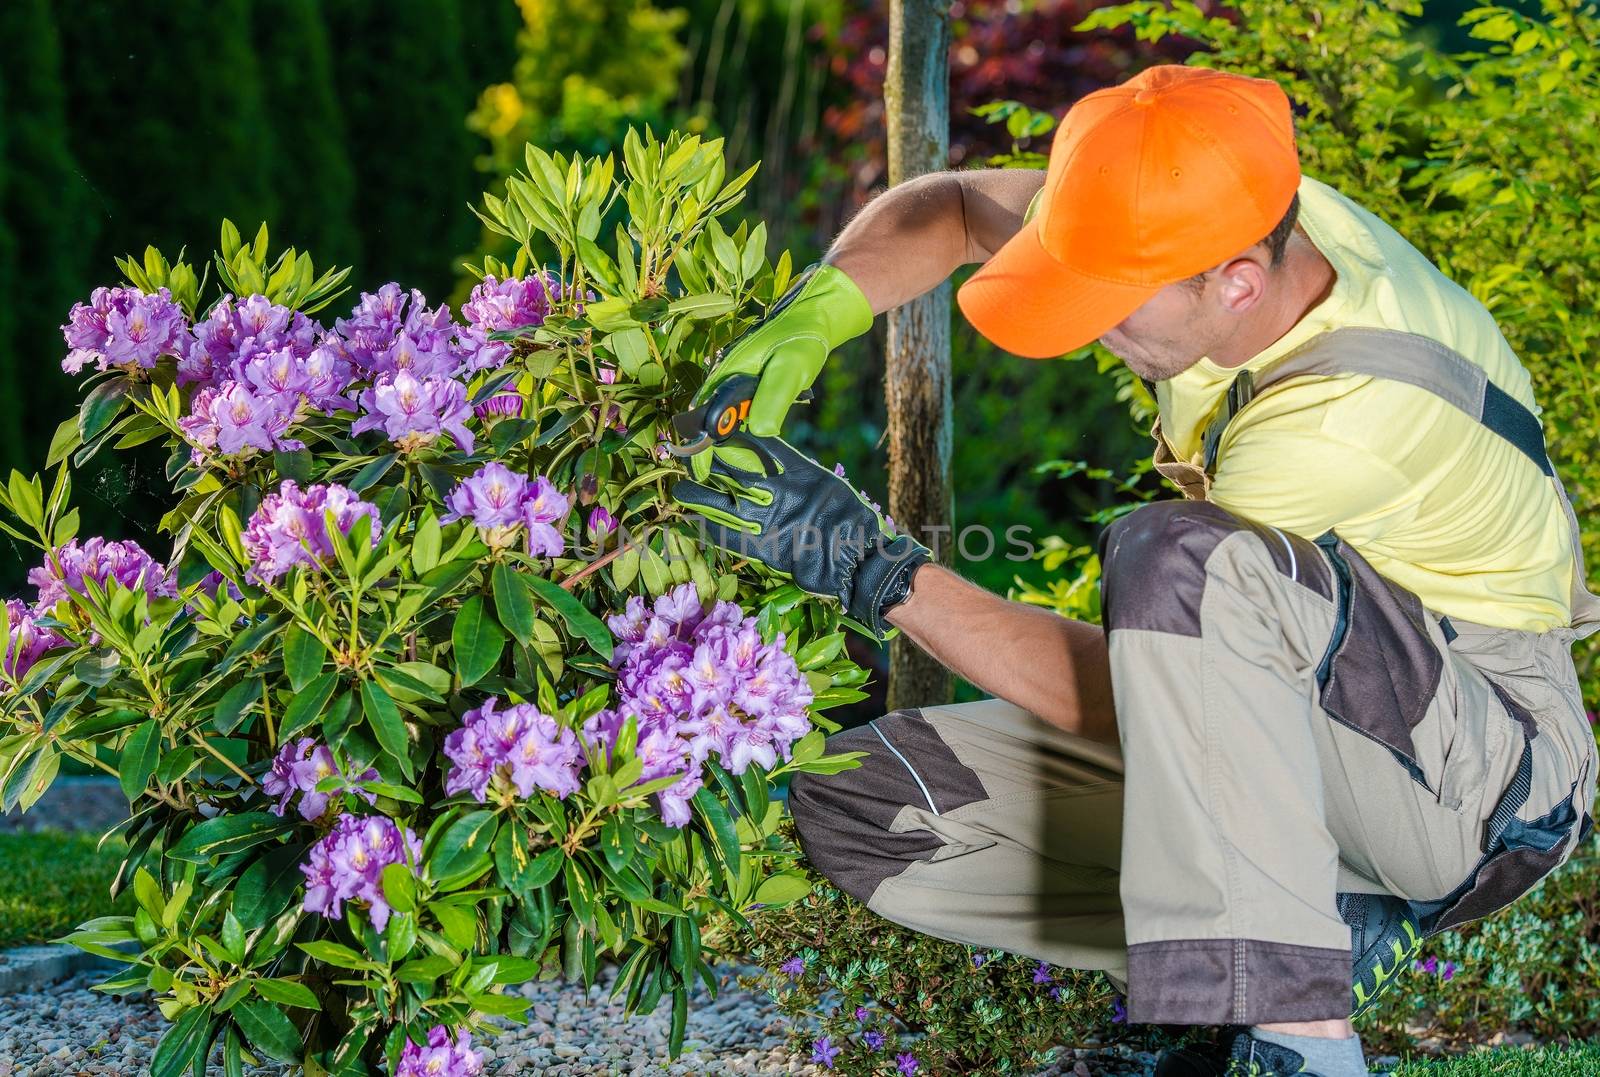 Professional Caucasian Gardener Taking Care of Flowers in the Garden. Professional Landscaping Garden Works.